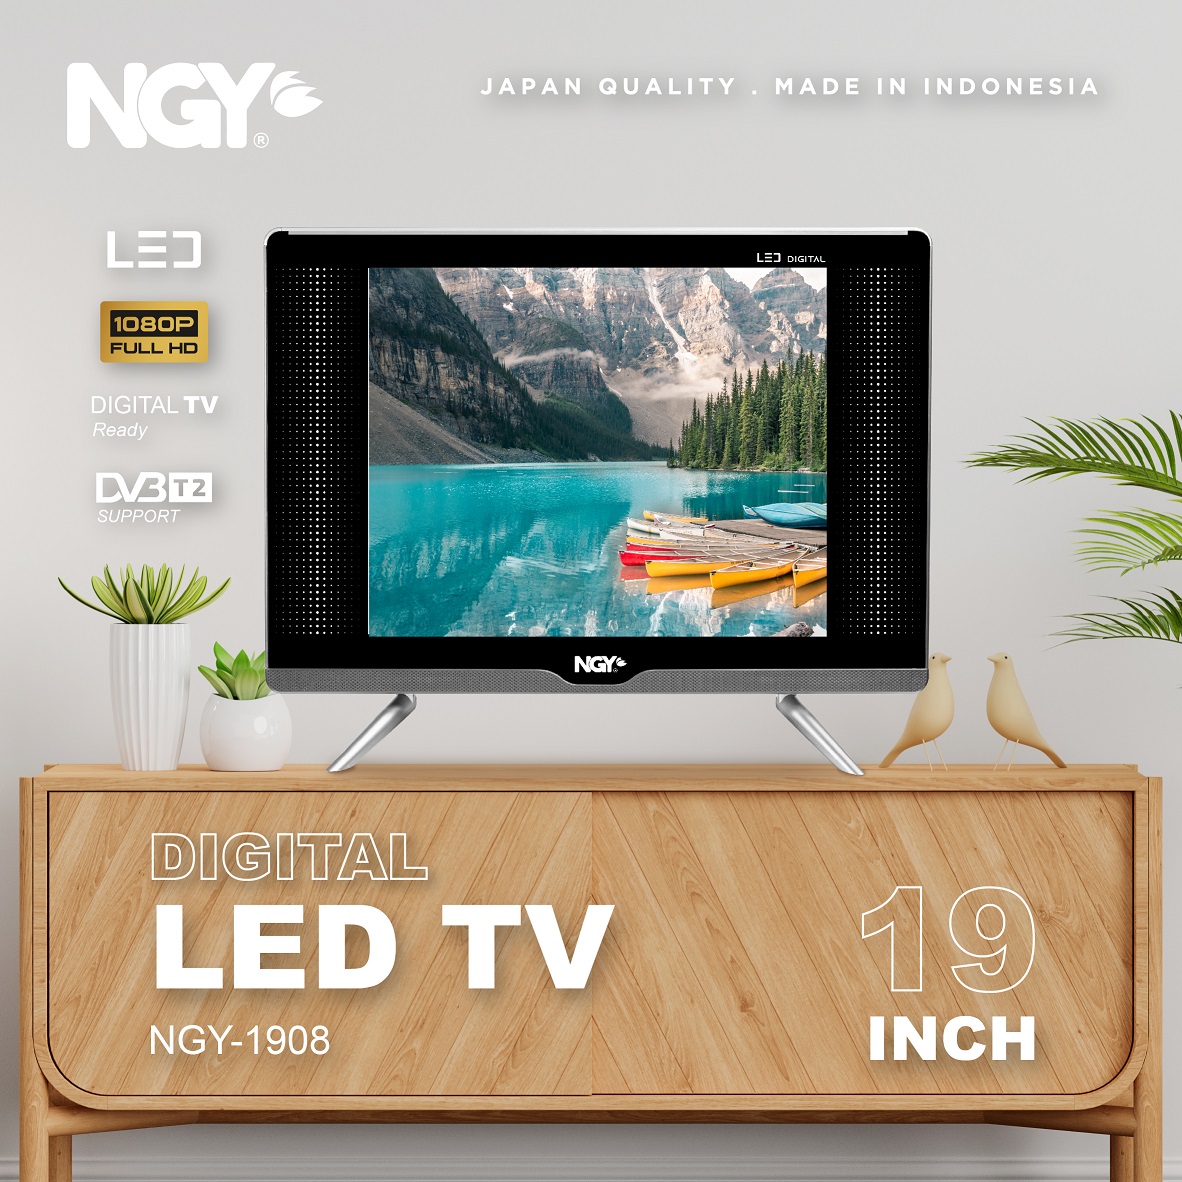 Jual Gazela TV LED 22 inci LED TV Analog & Digital HD Ready